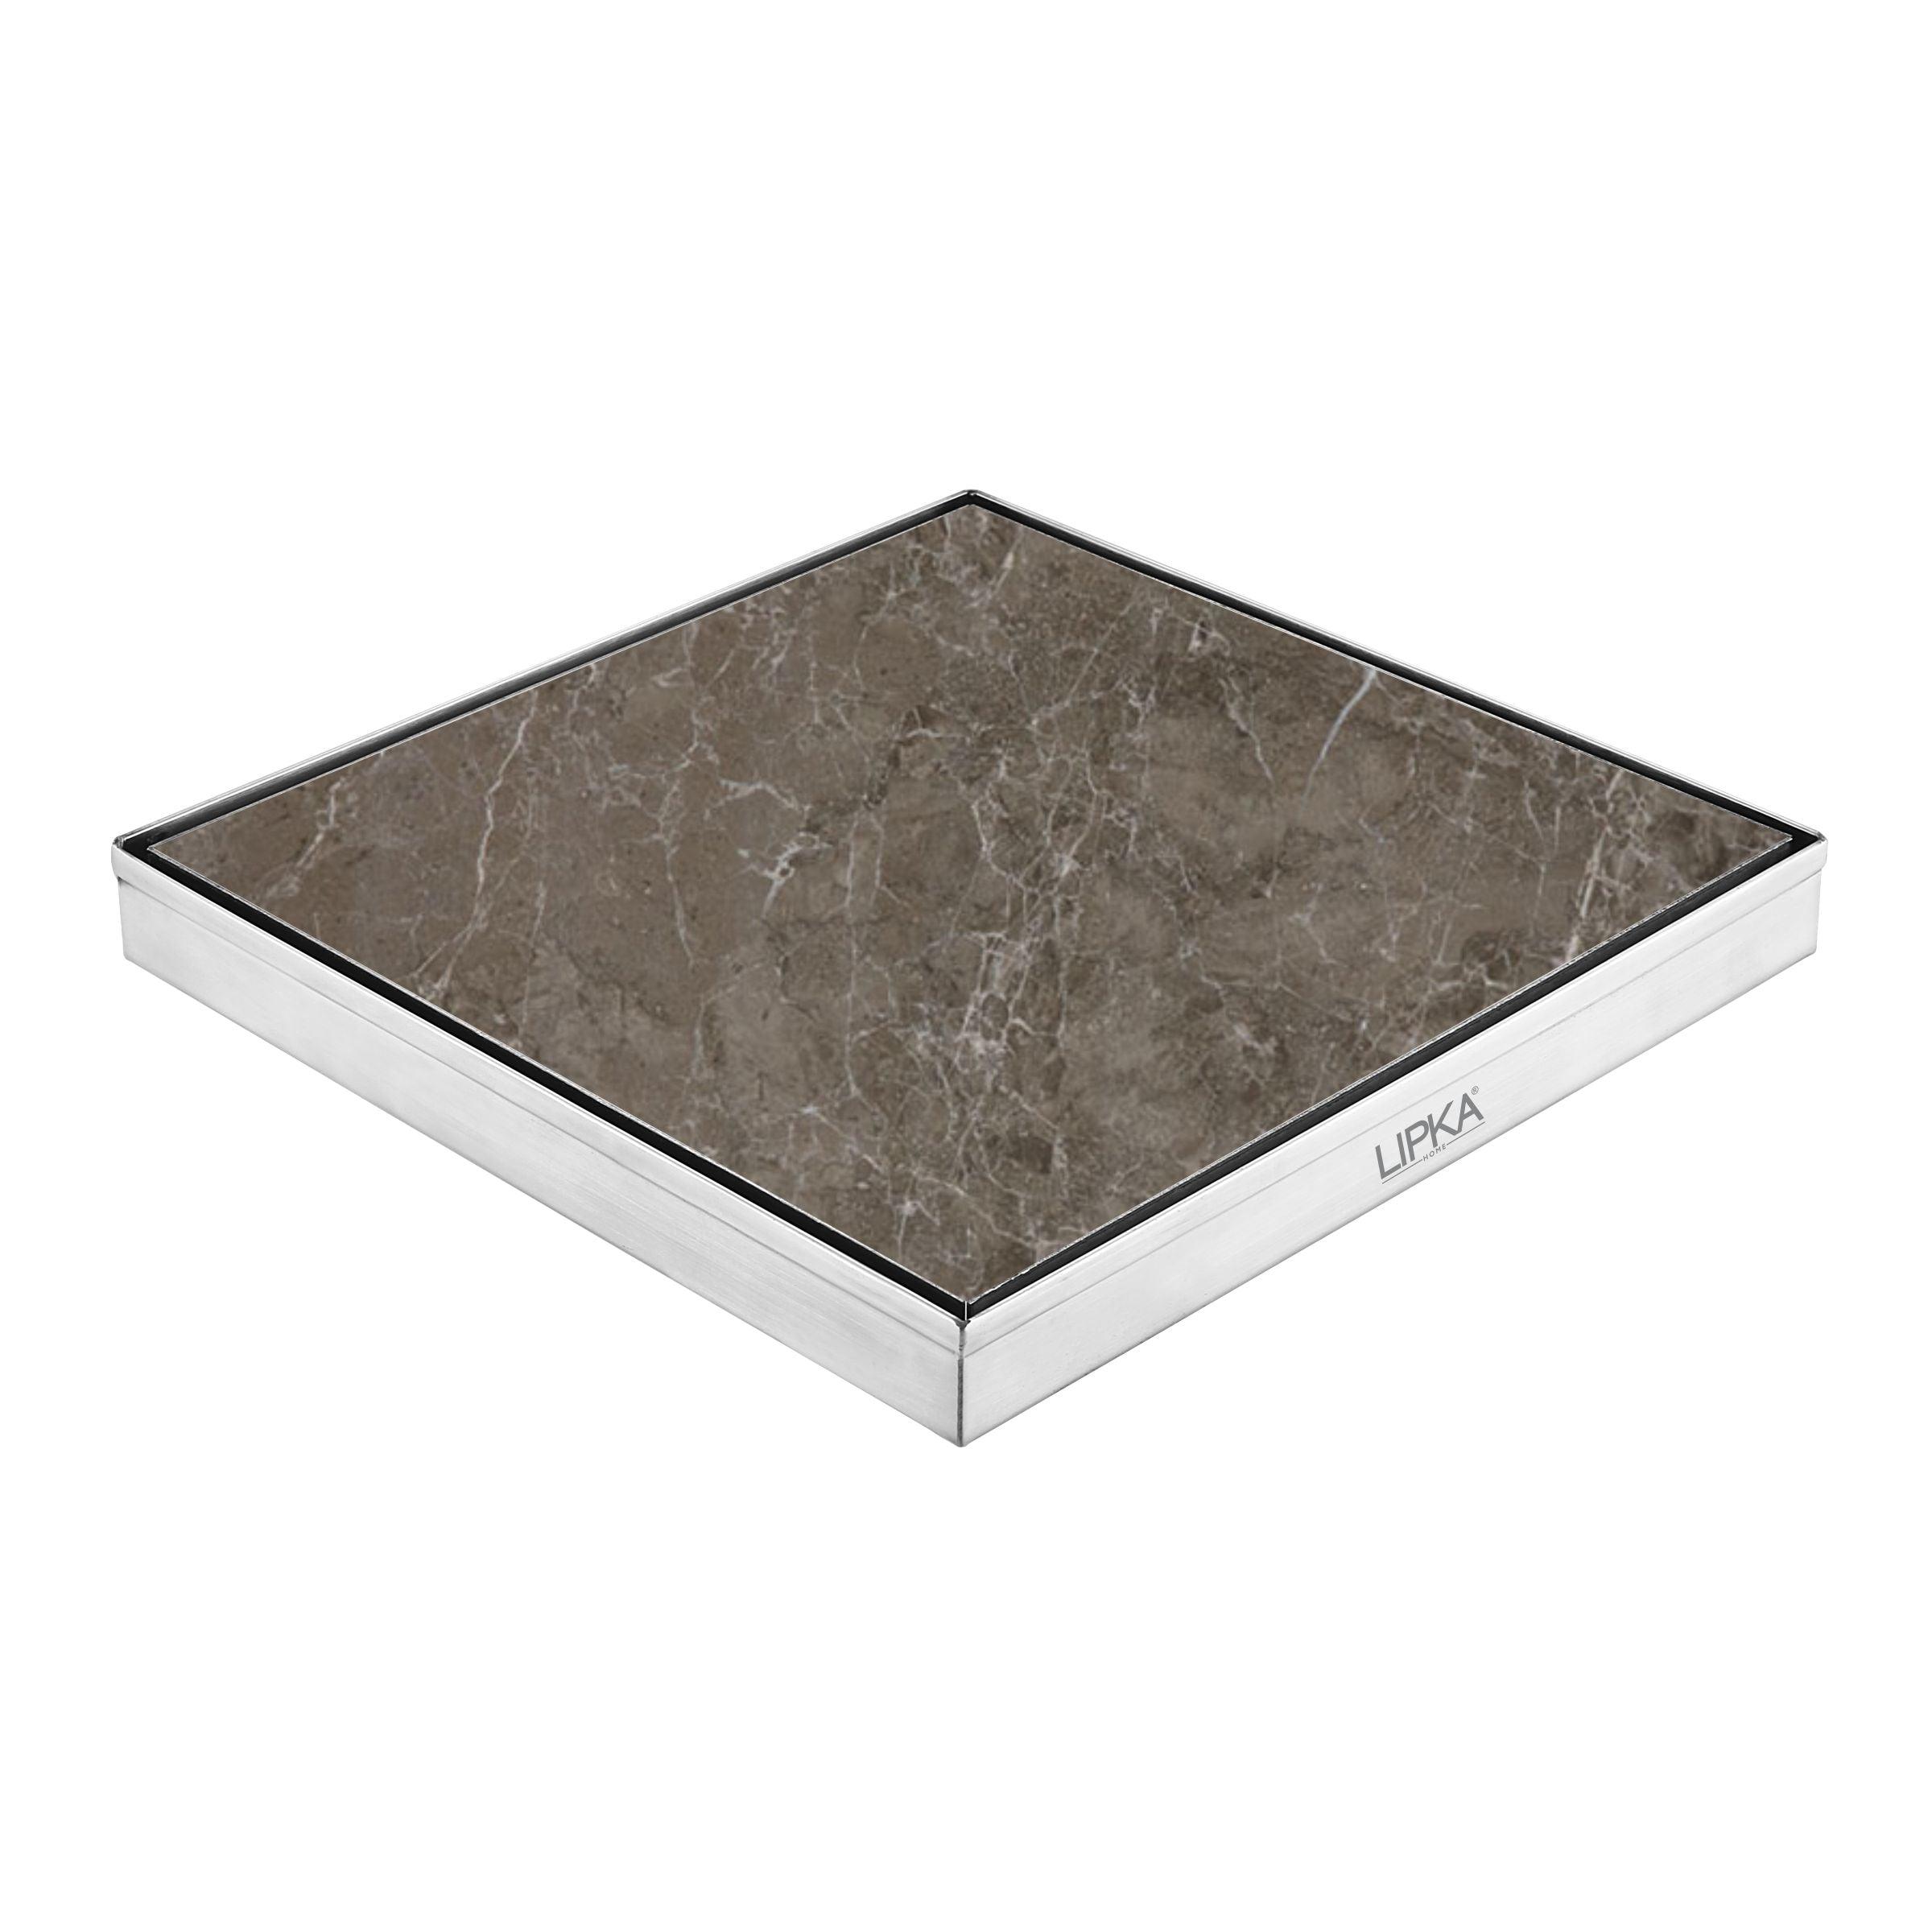 Tile Insert Floor Drain (12 x 12 Inches)